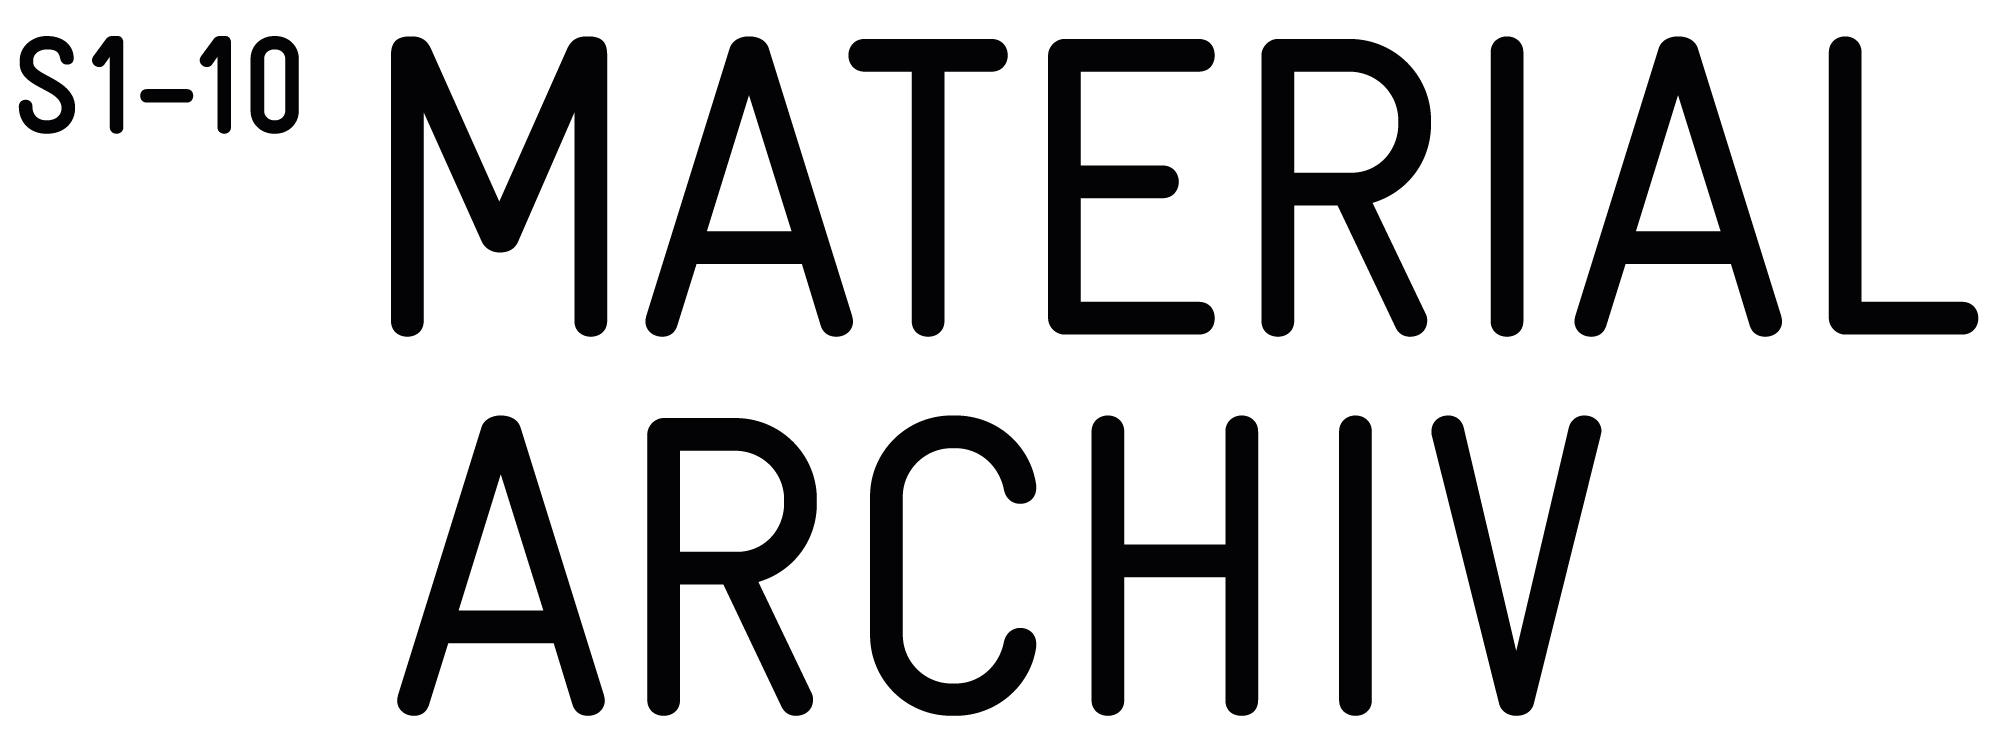 Materialarchiv-logo-s1-10.jpg